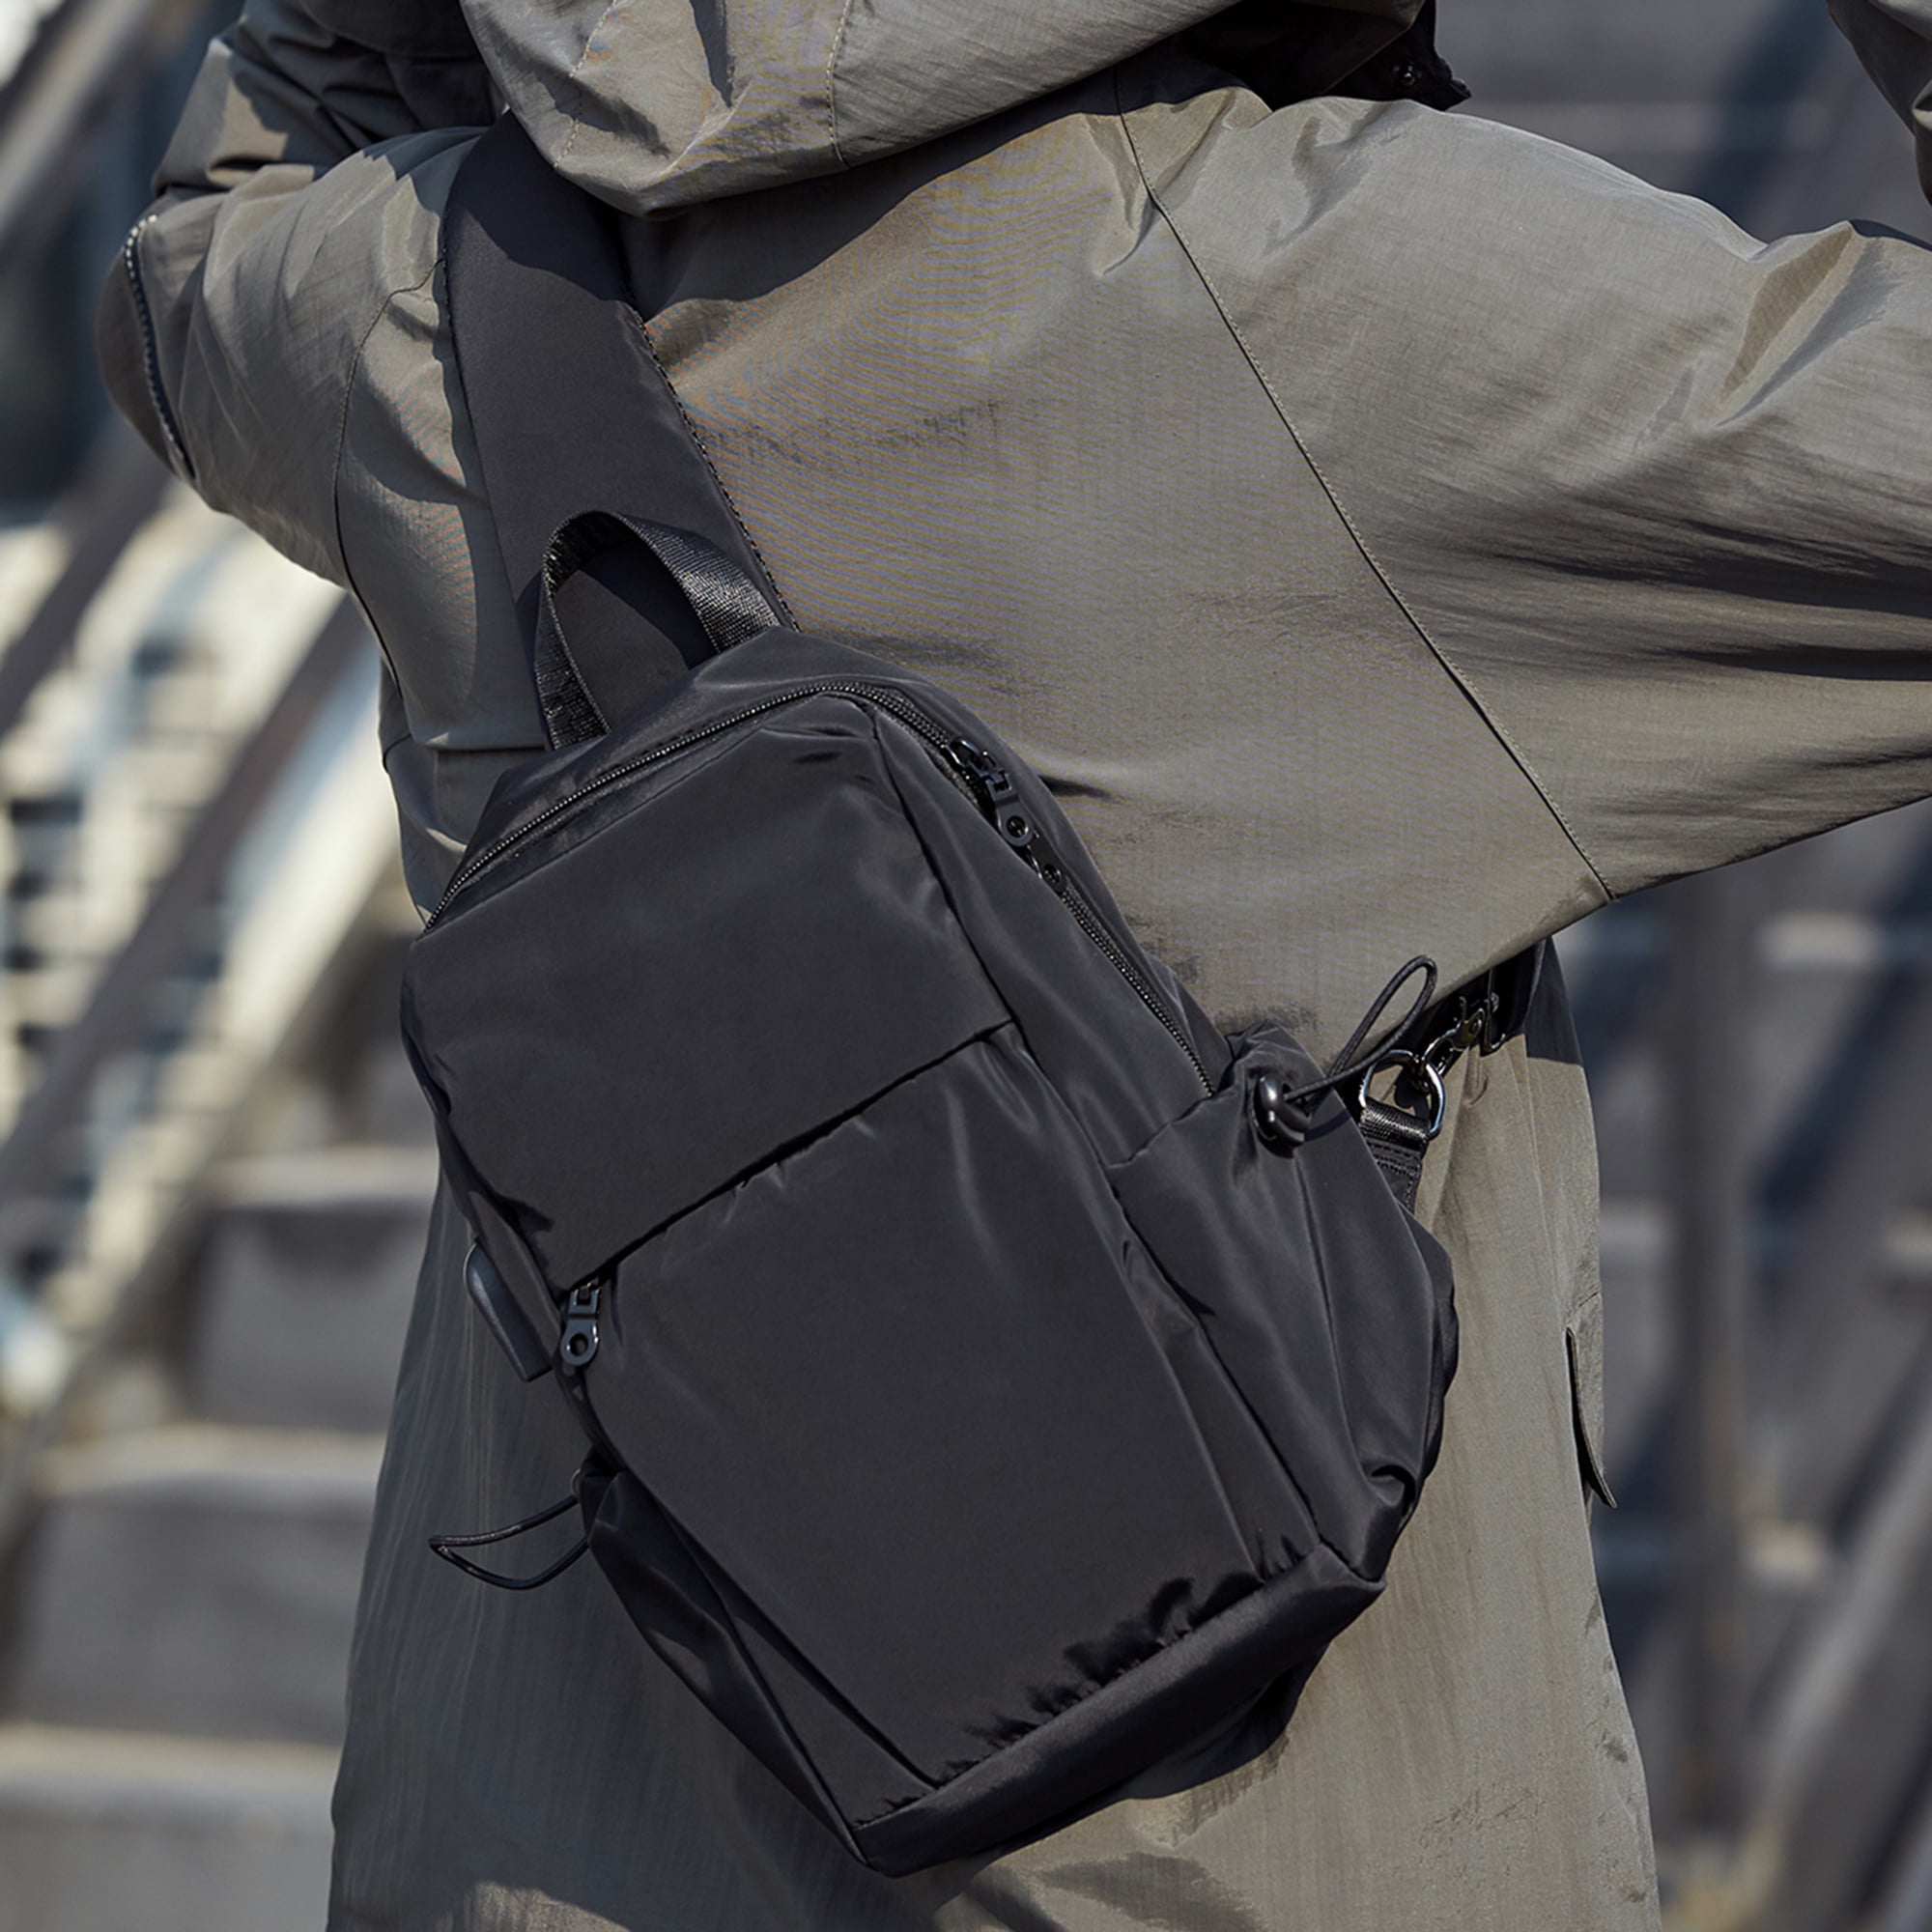 SYCNB Sling Backpack Crossbody Bag for Men Women,Small Backpack One Shoulder Bag, Water Resistant Chest Bag, Adult Unisex, Gray